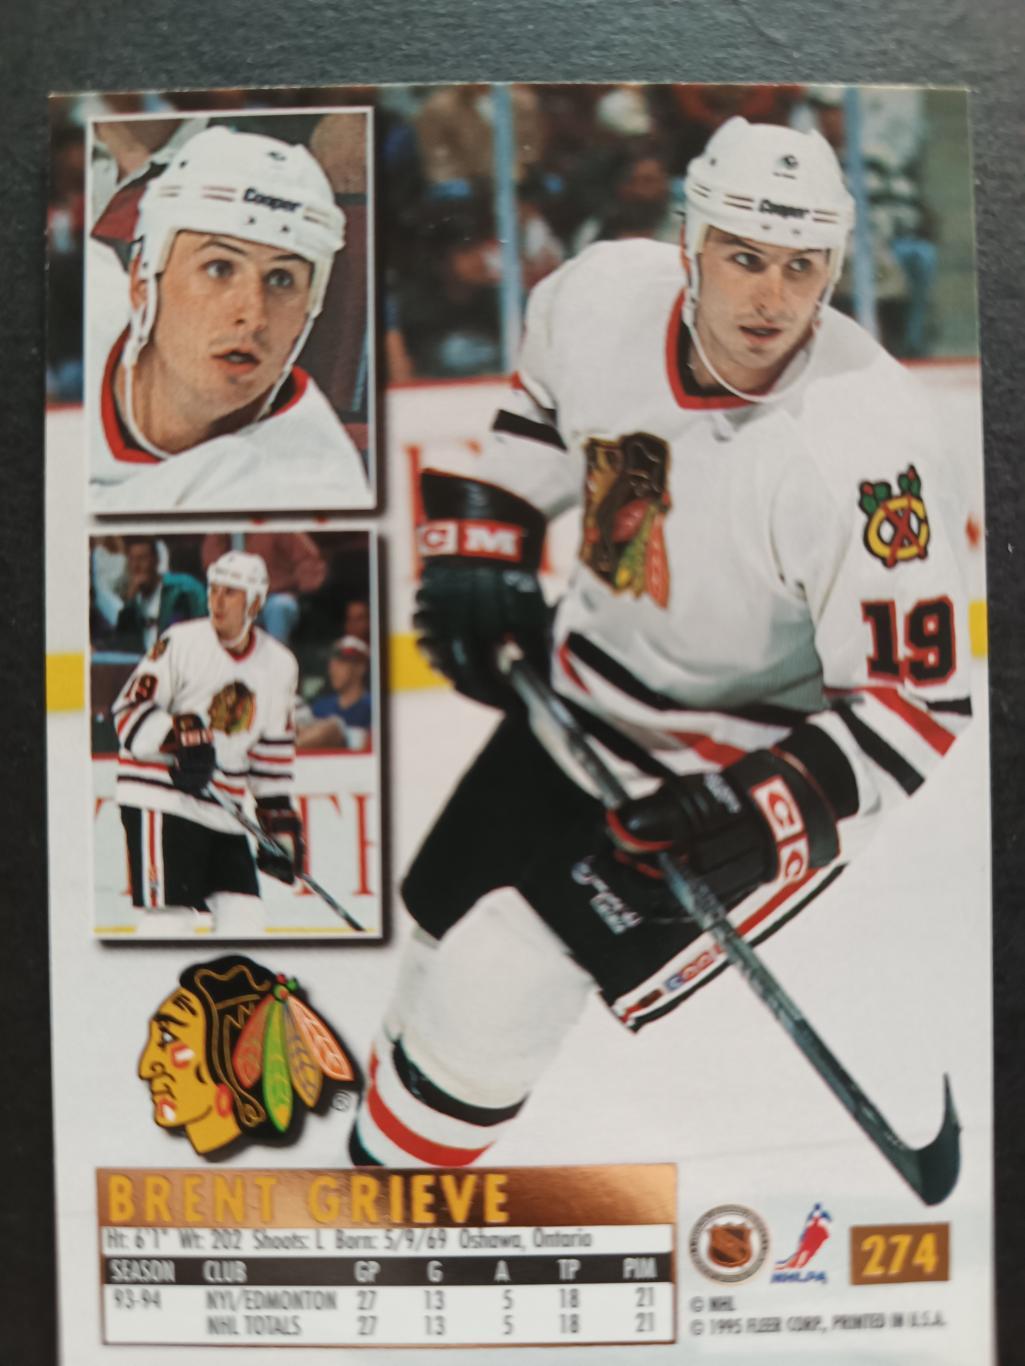 ХОККЕЙ КАРТОЧКА НХЛ FLEER ULTRA 1994-95 NHL BRENT GRIEVE BLACK HAWKS #274 1